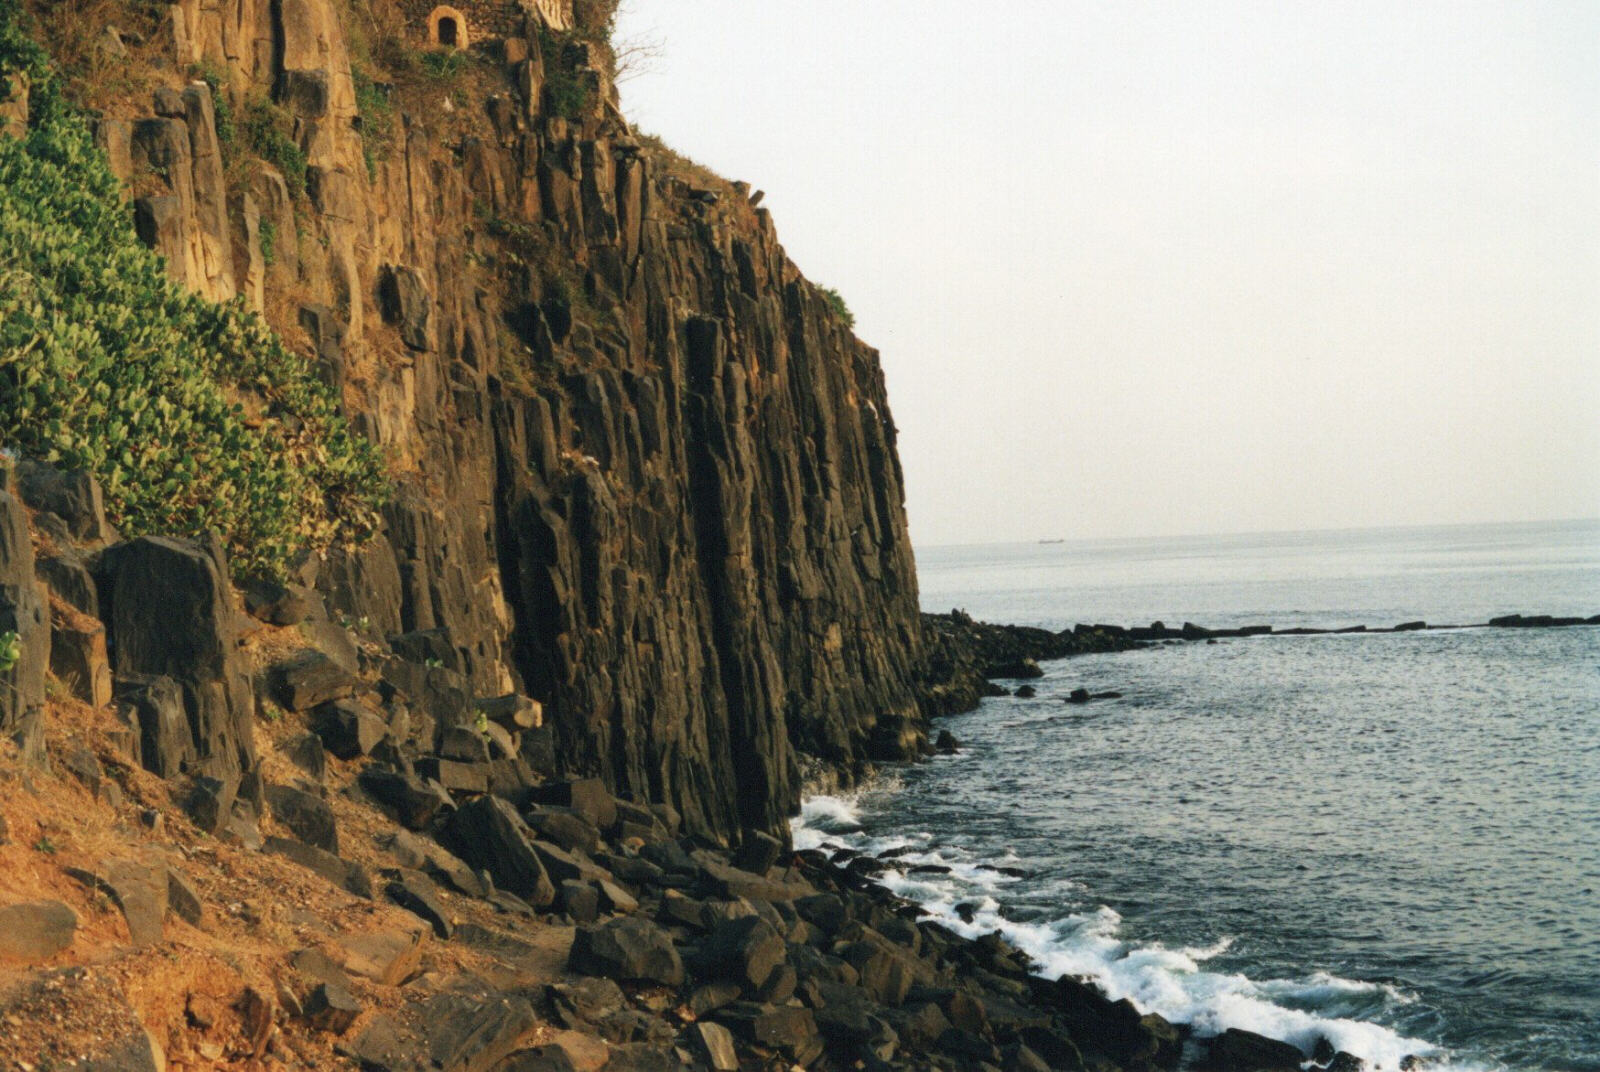 Goree island, cliffs used in Guns of Navarone film